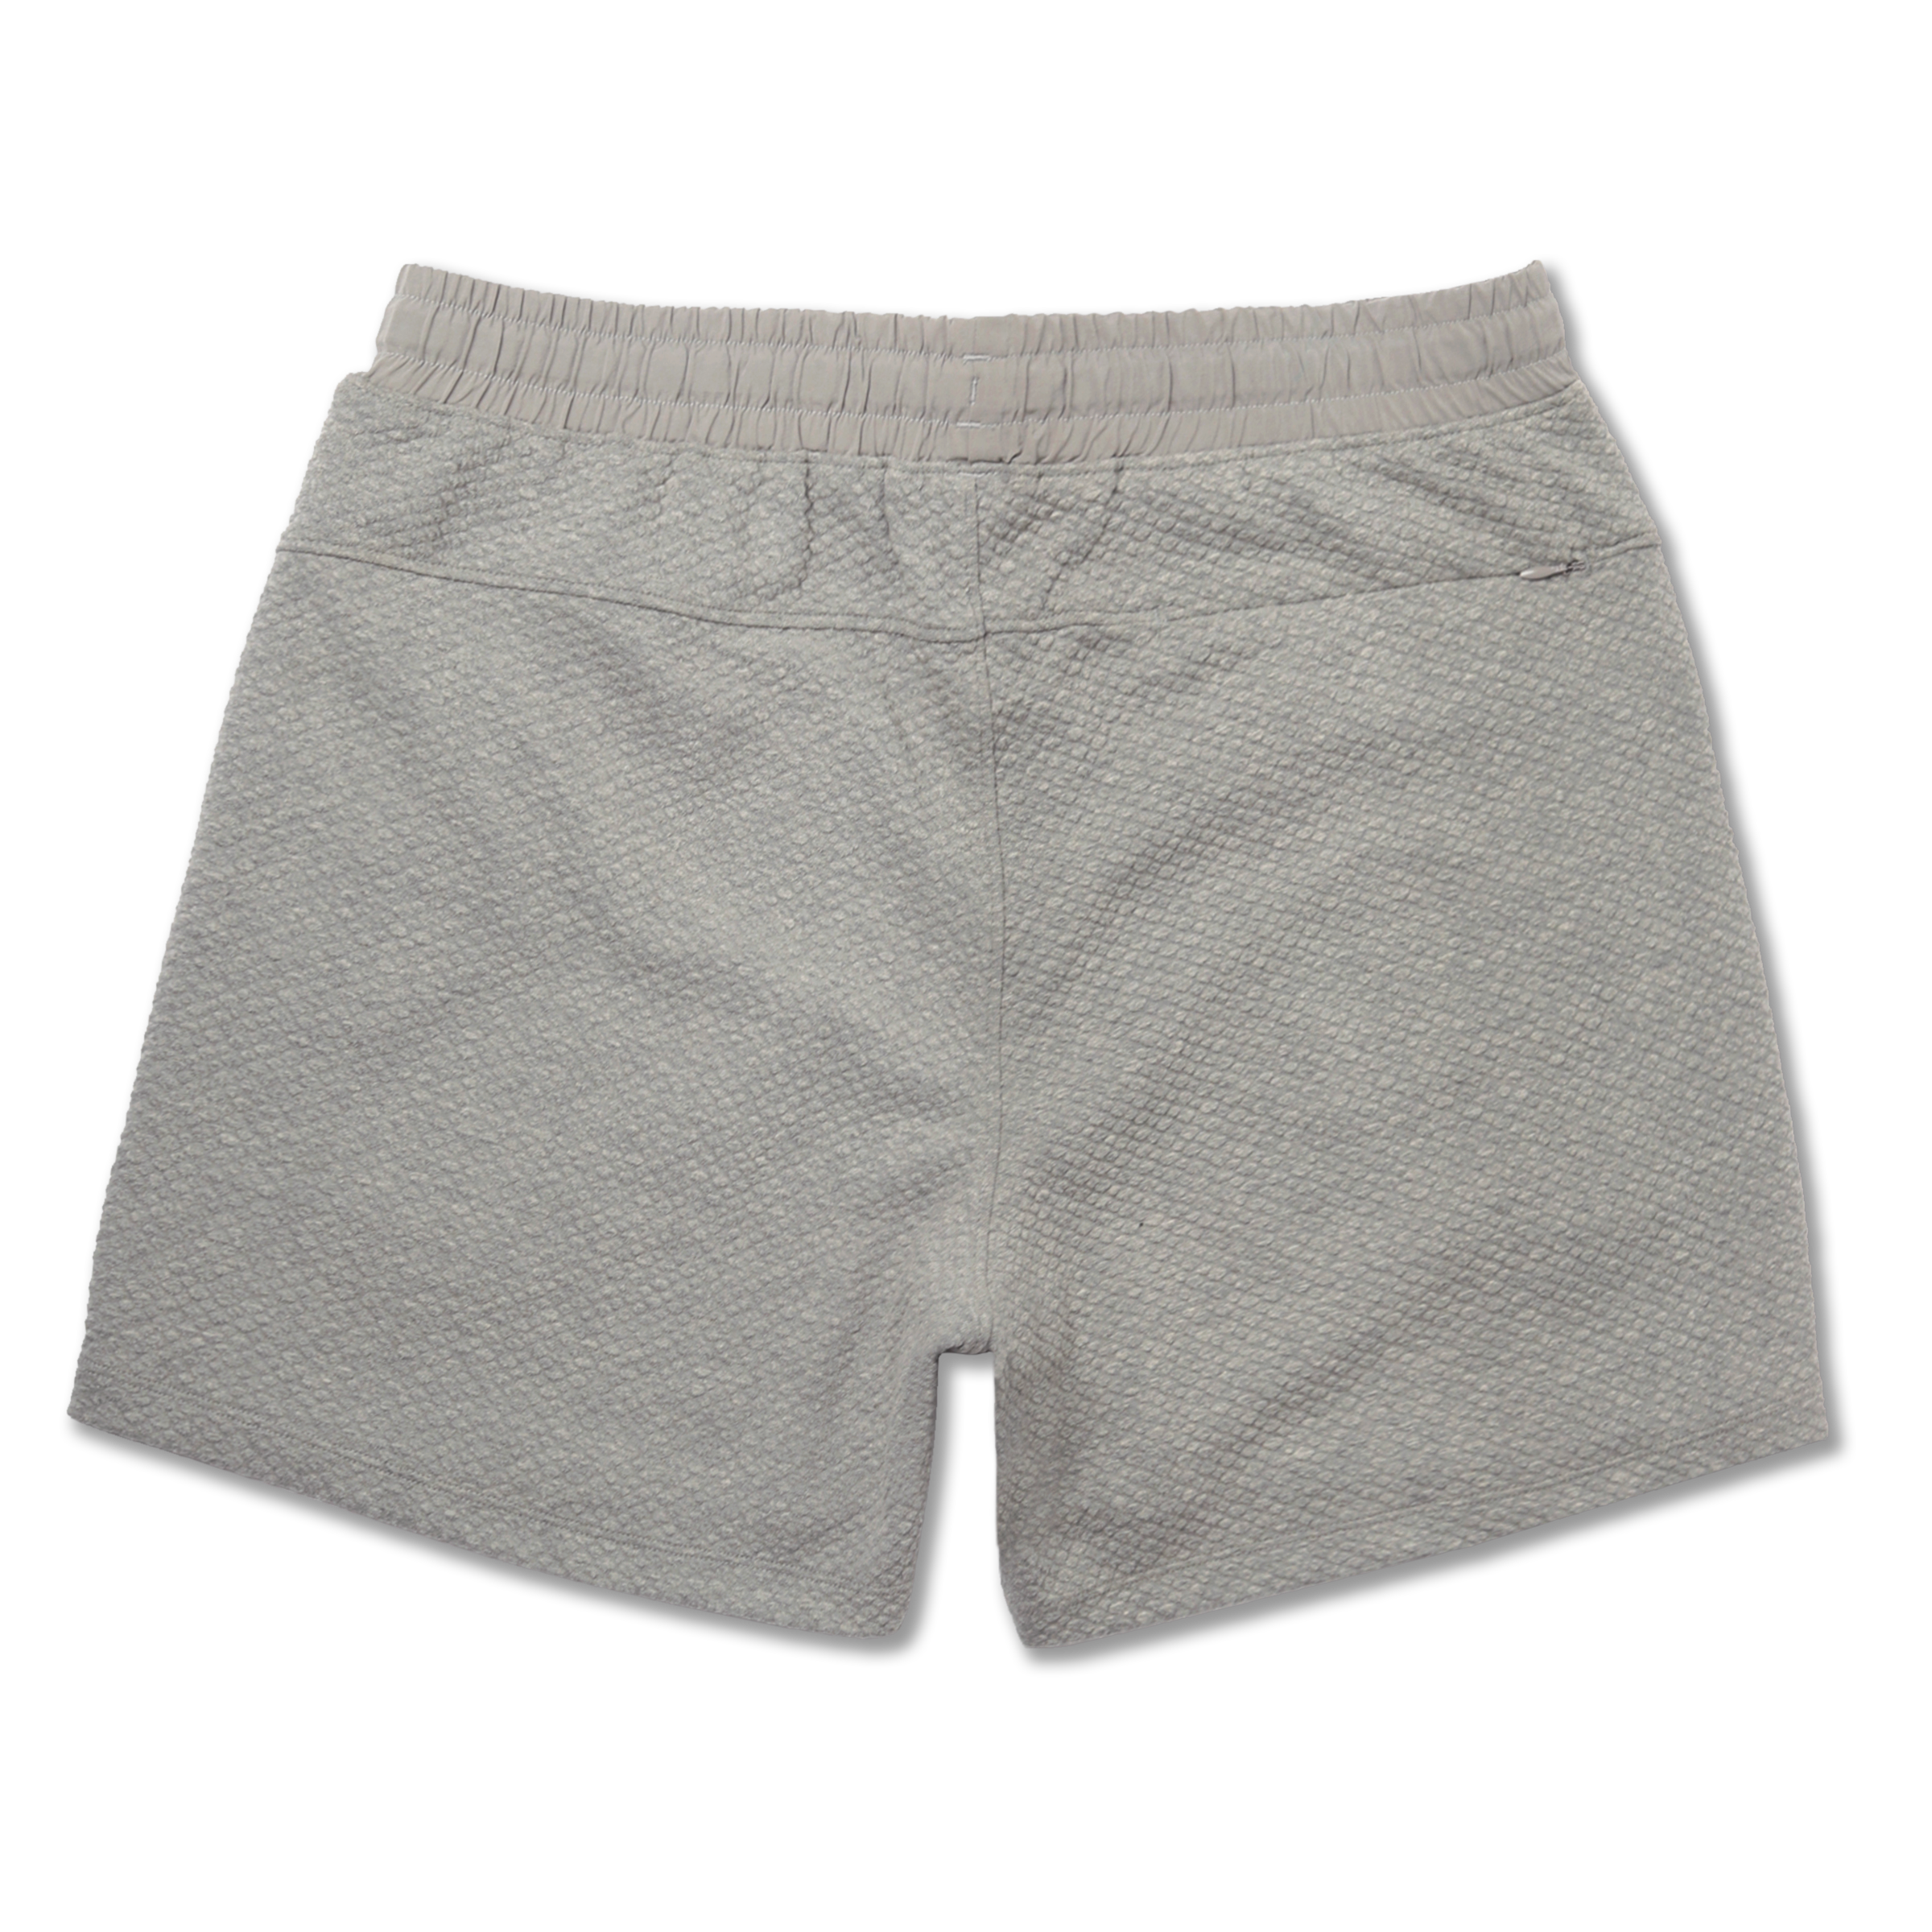 Roam Short 5.5" Heather Grey back with elastic waistband and back right hidden zipper pocket